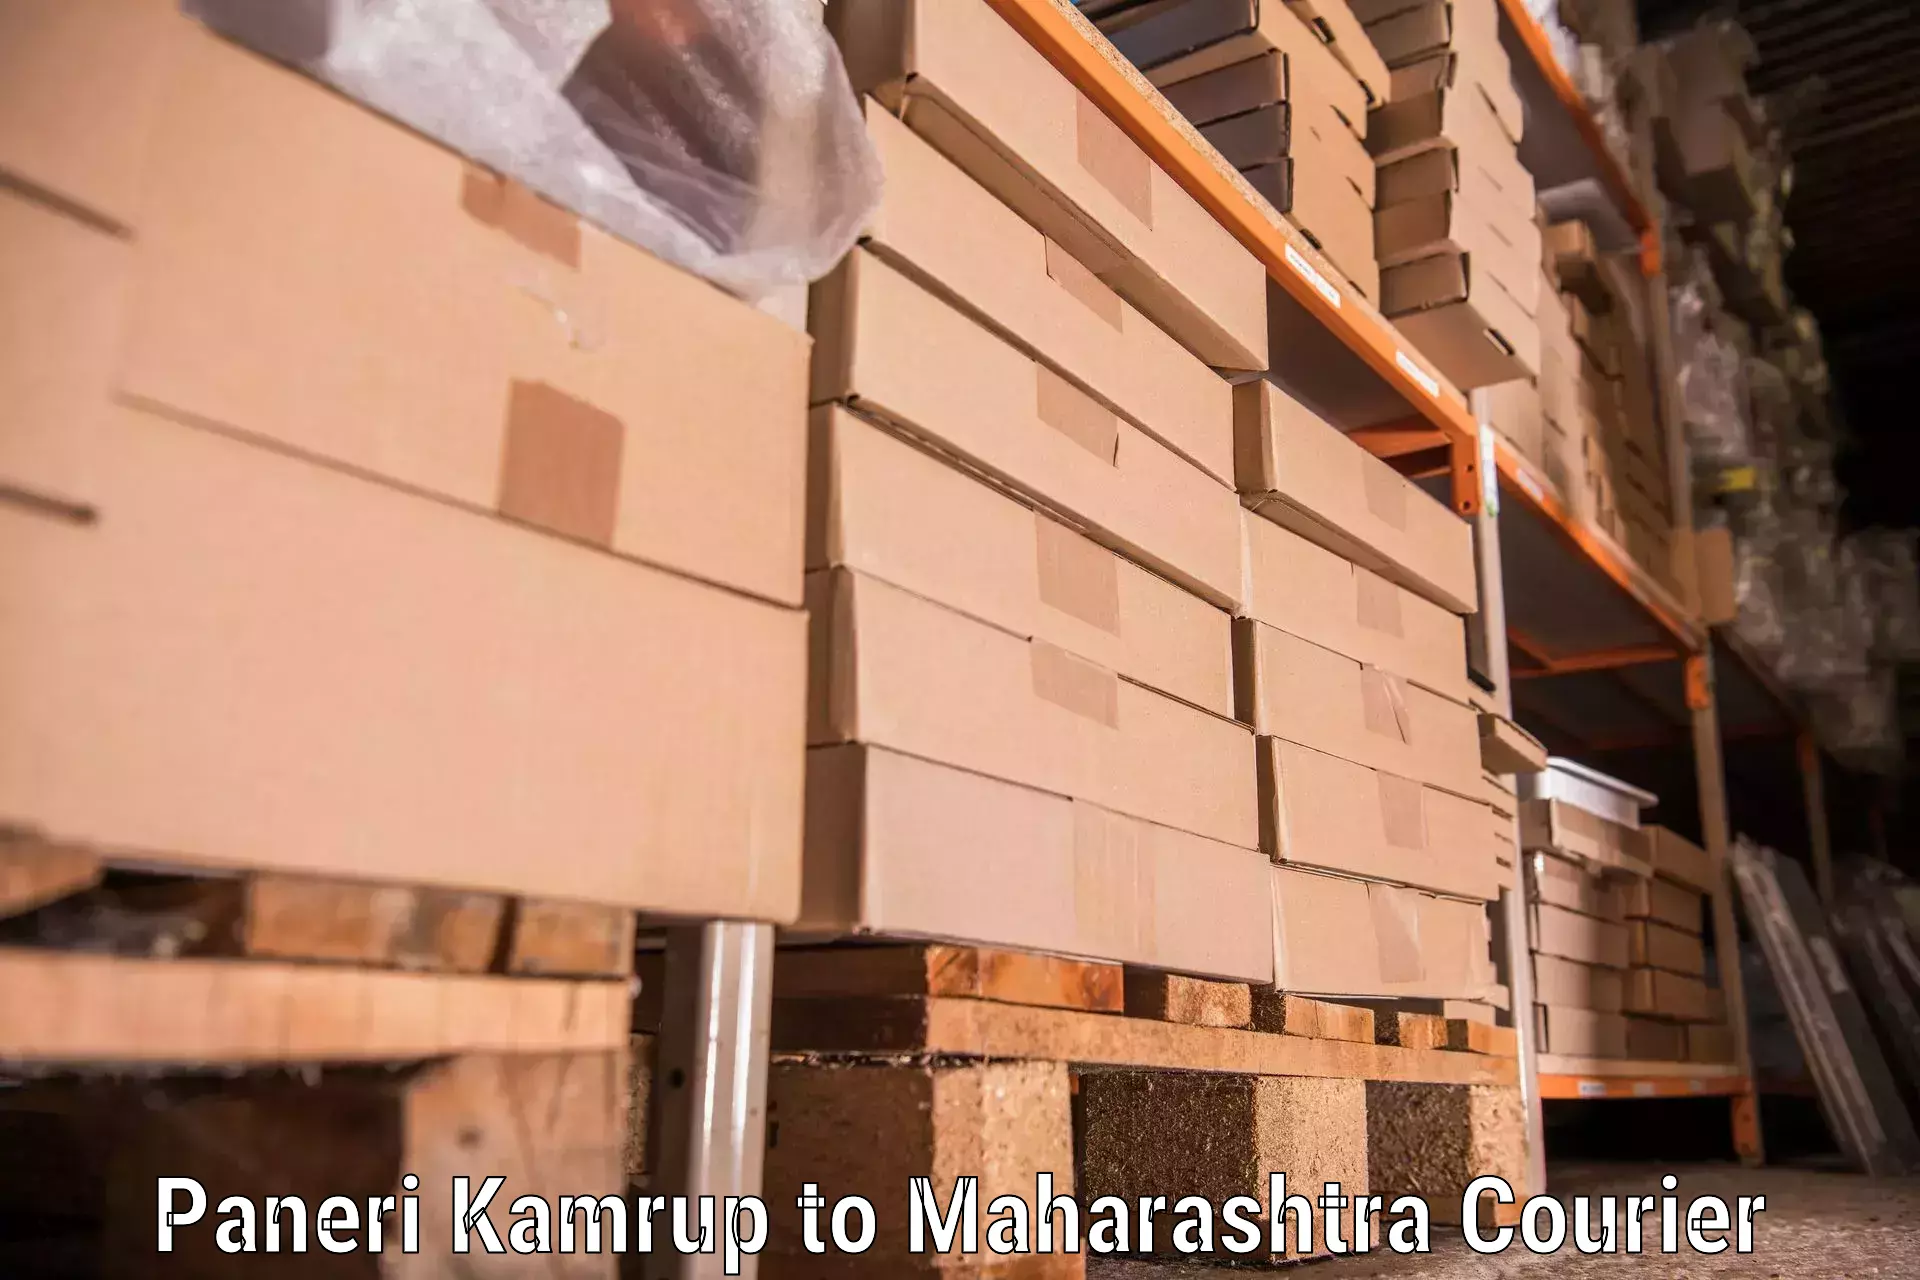 Professional moving company Paneri Kamrup to Solapur